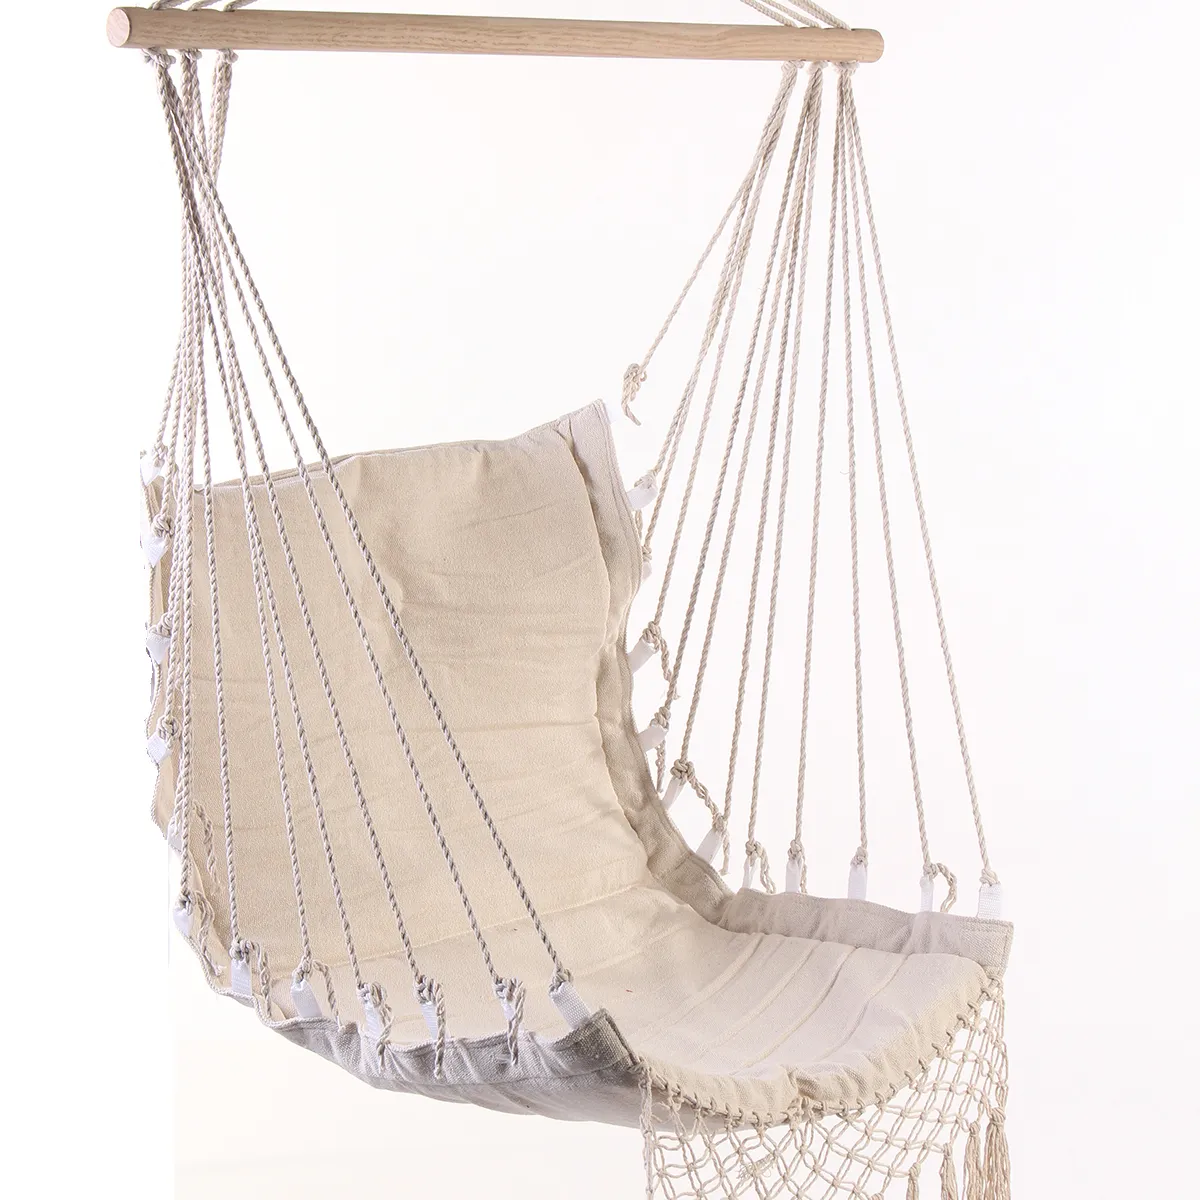 Nordic Style Deluxe Hammock Outdoor Indoor Garden Dormitory Bedroom Hanging Chair For Child Adult Swinging Single Safety Chair